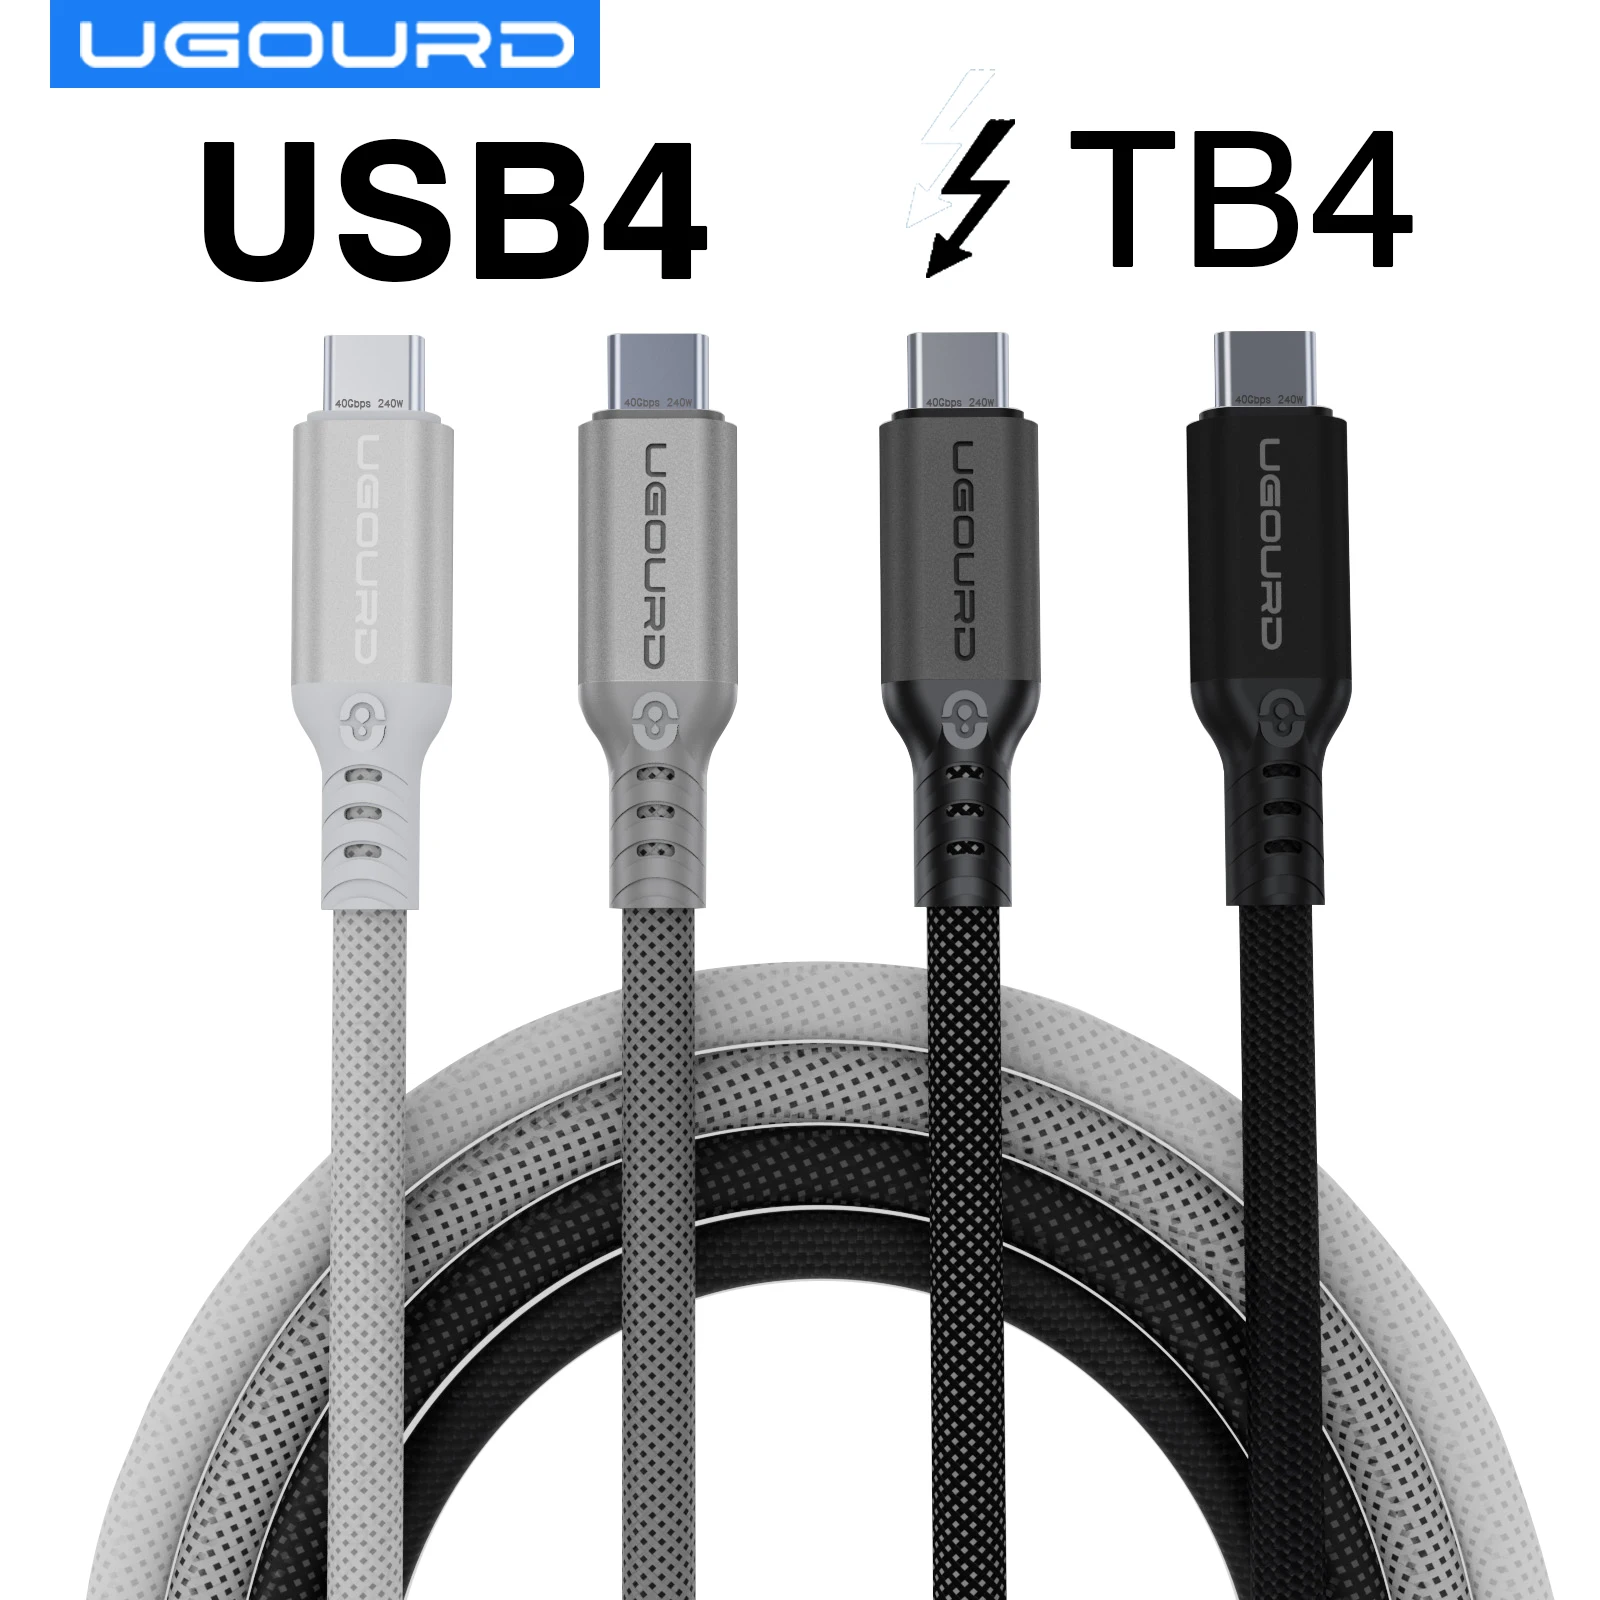 UGOURD 썬더볼트 4 2m USB4 케이블, 썬더볼트 3 타입 C 고속 충전기 케이블, 노트북 모바일 디스크용, 240W 데이터 전송, 40Gbps